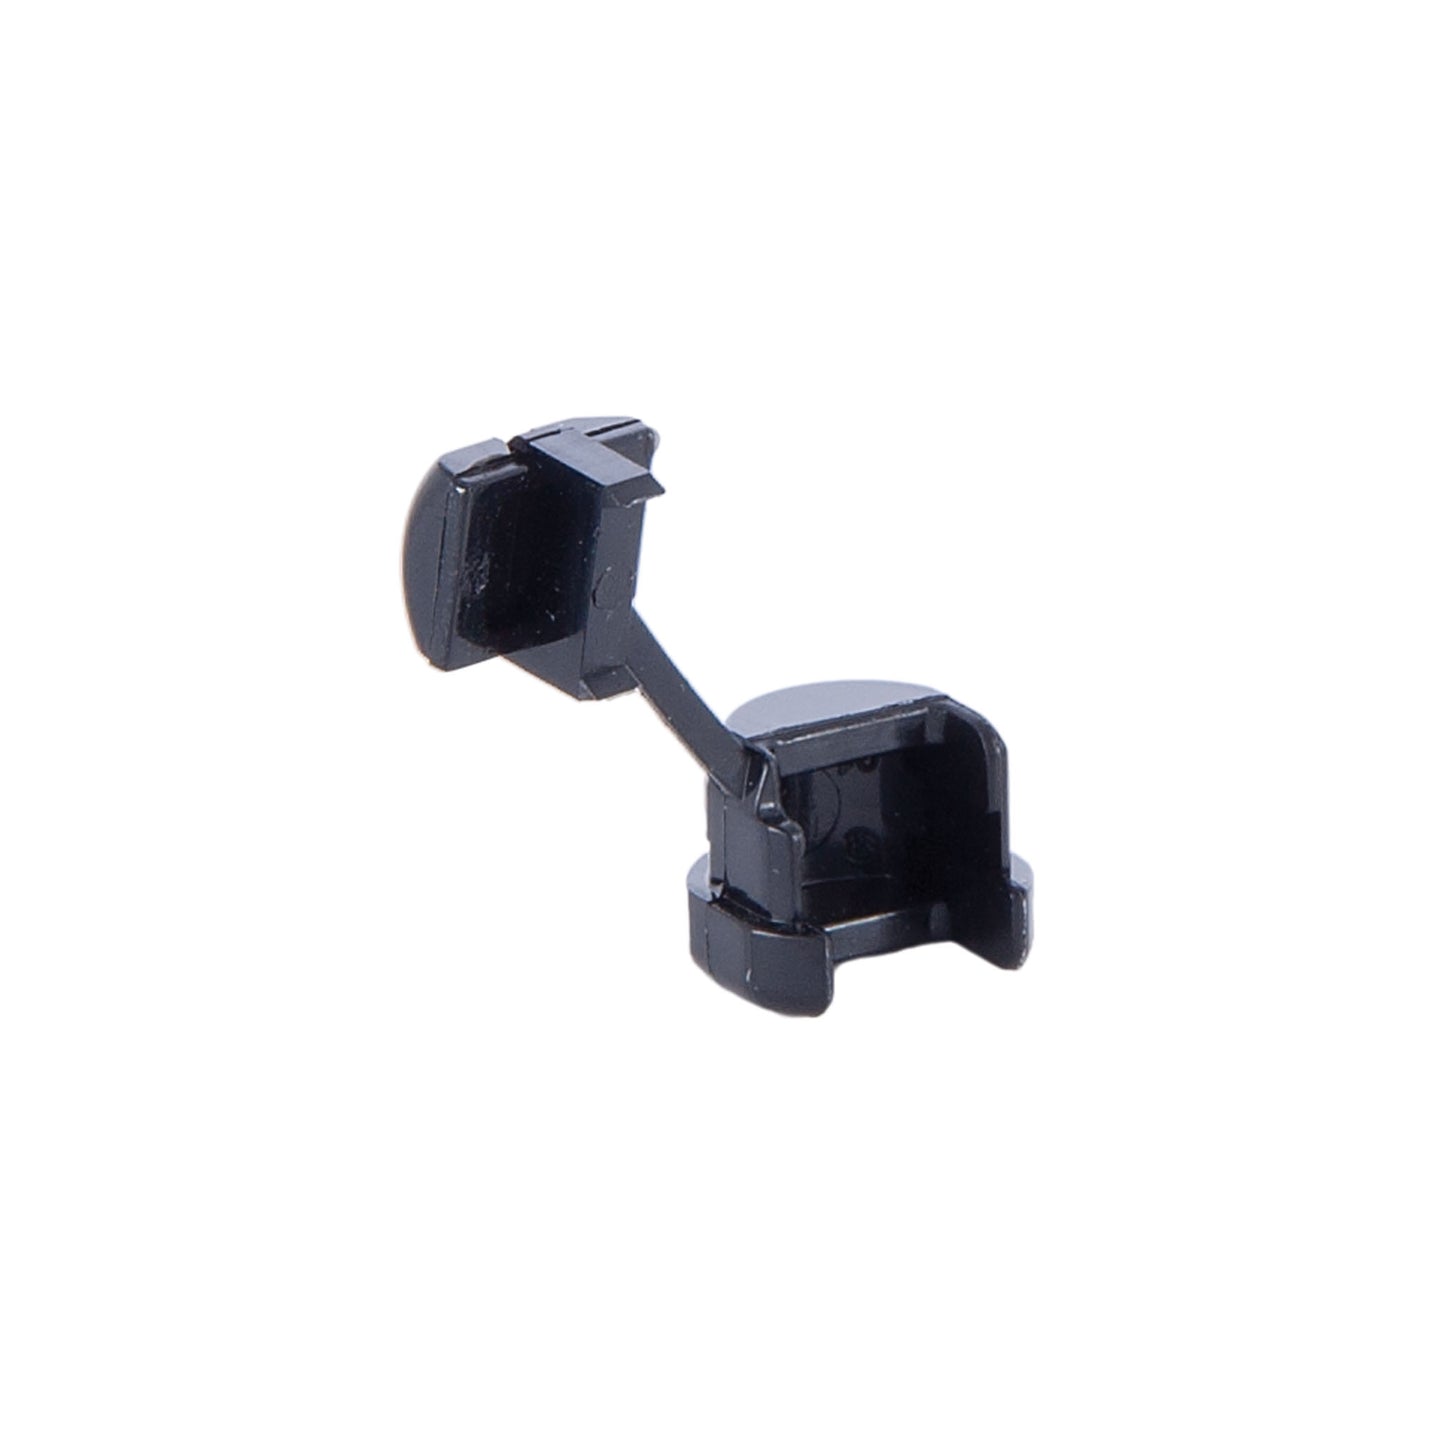 Black or White Color, Plastic Strain Relief Bushings for SPT-2 Lamp Cord (26912)